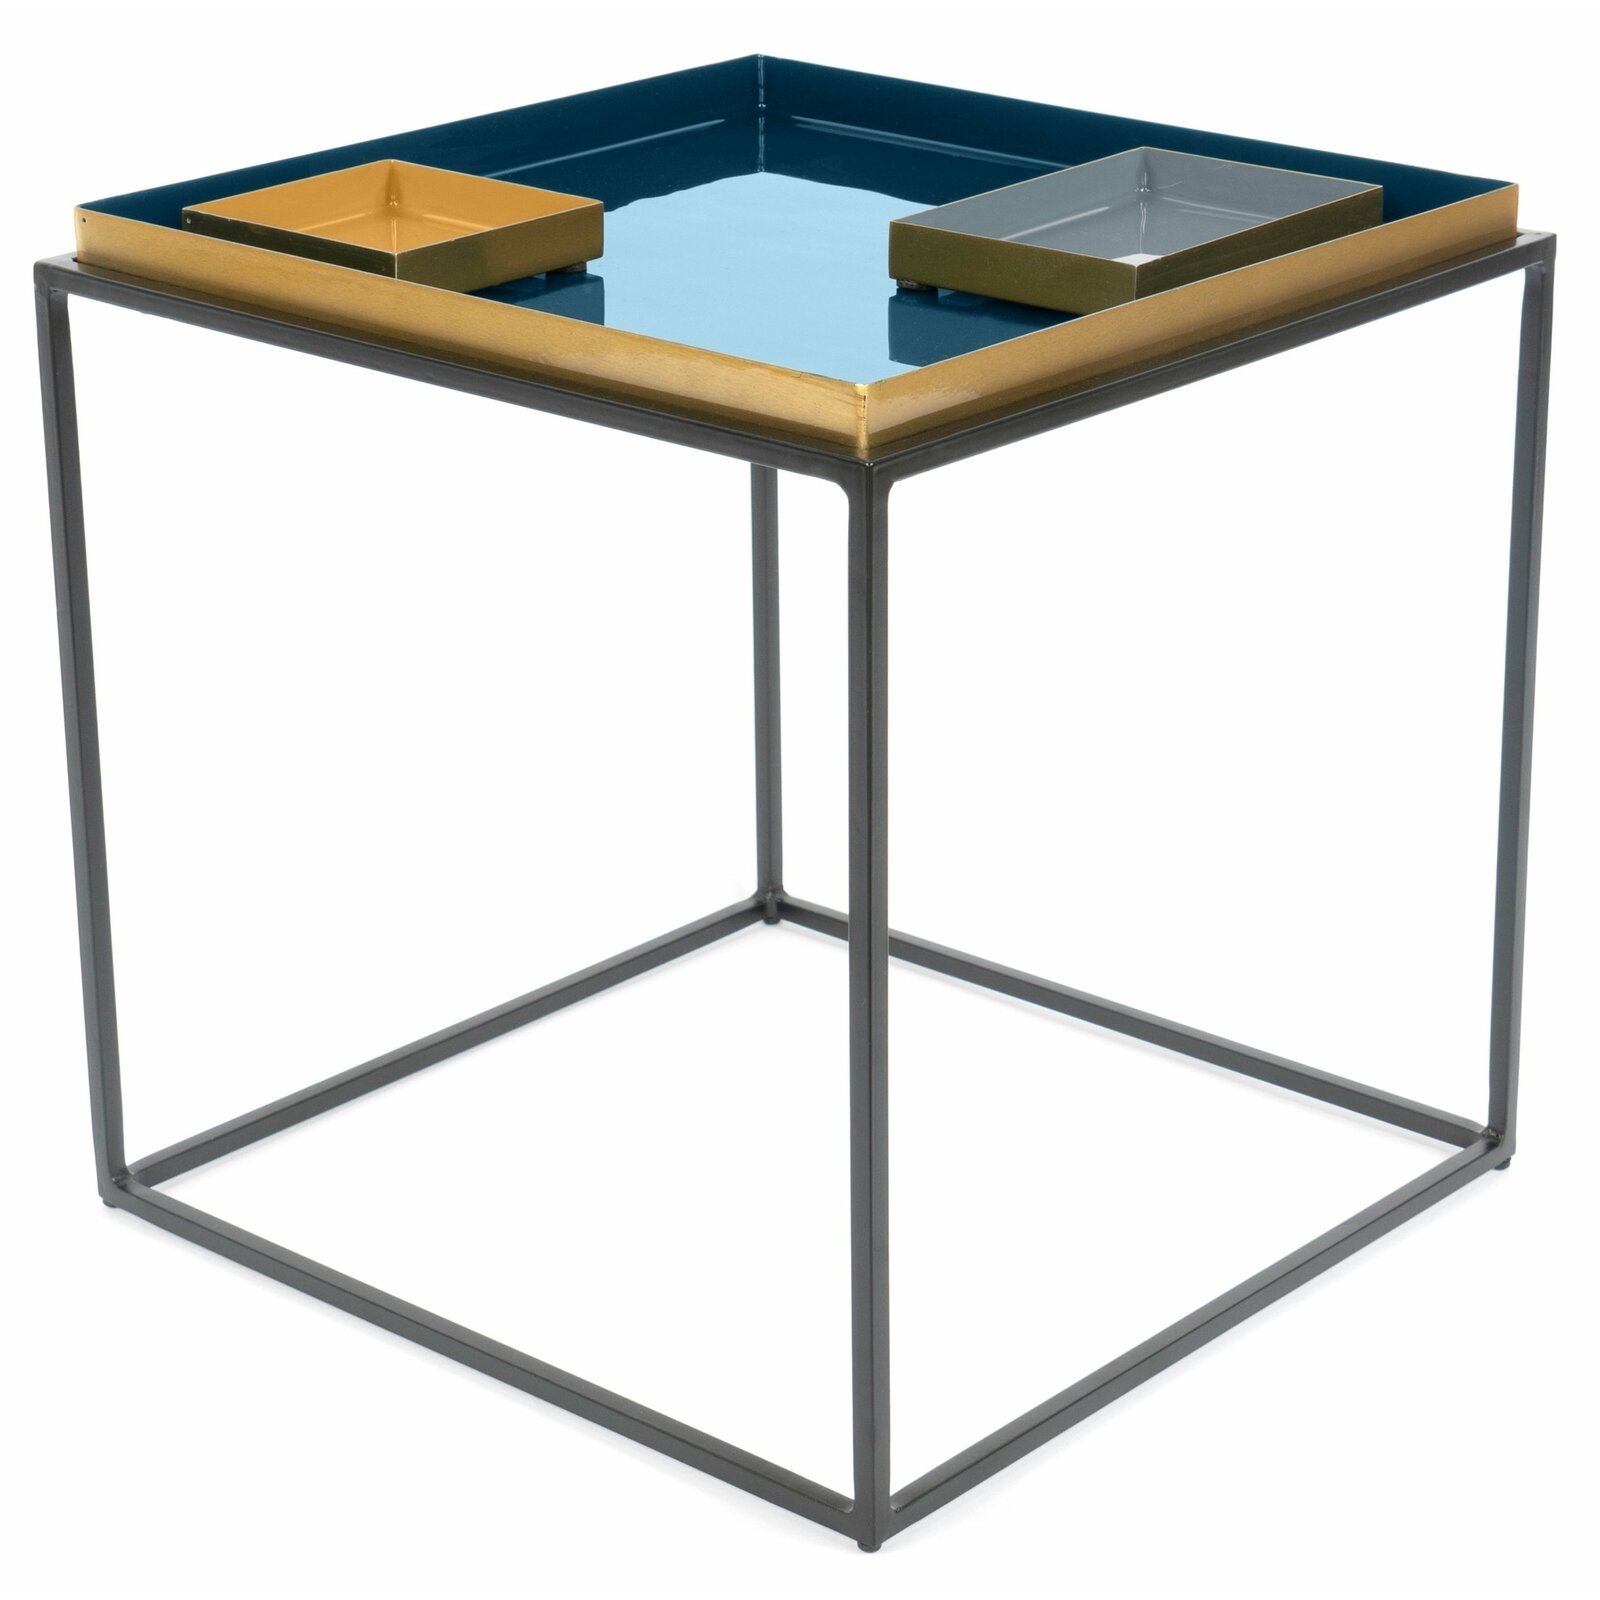 Table dâappoint carrÃ© couleur bleu et orange l45cm